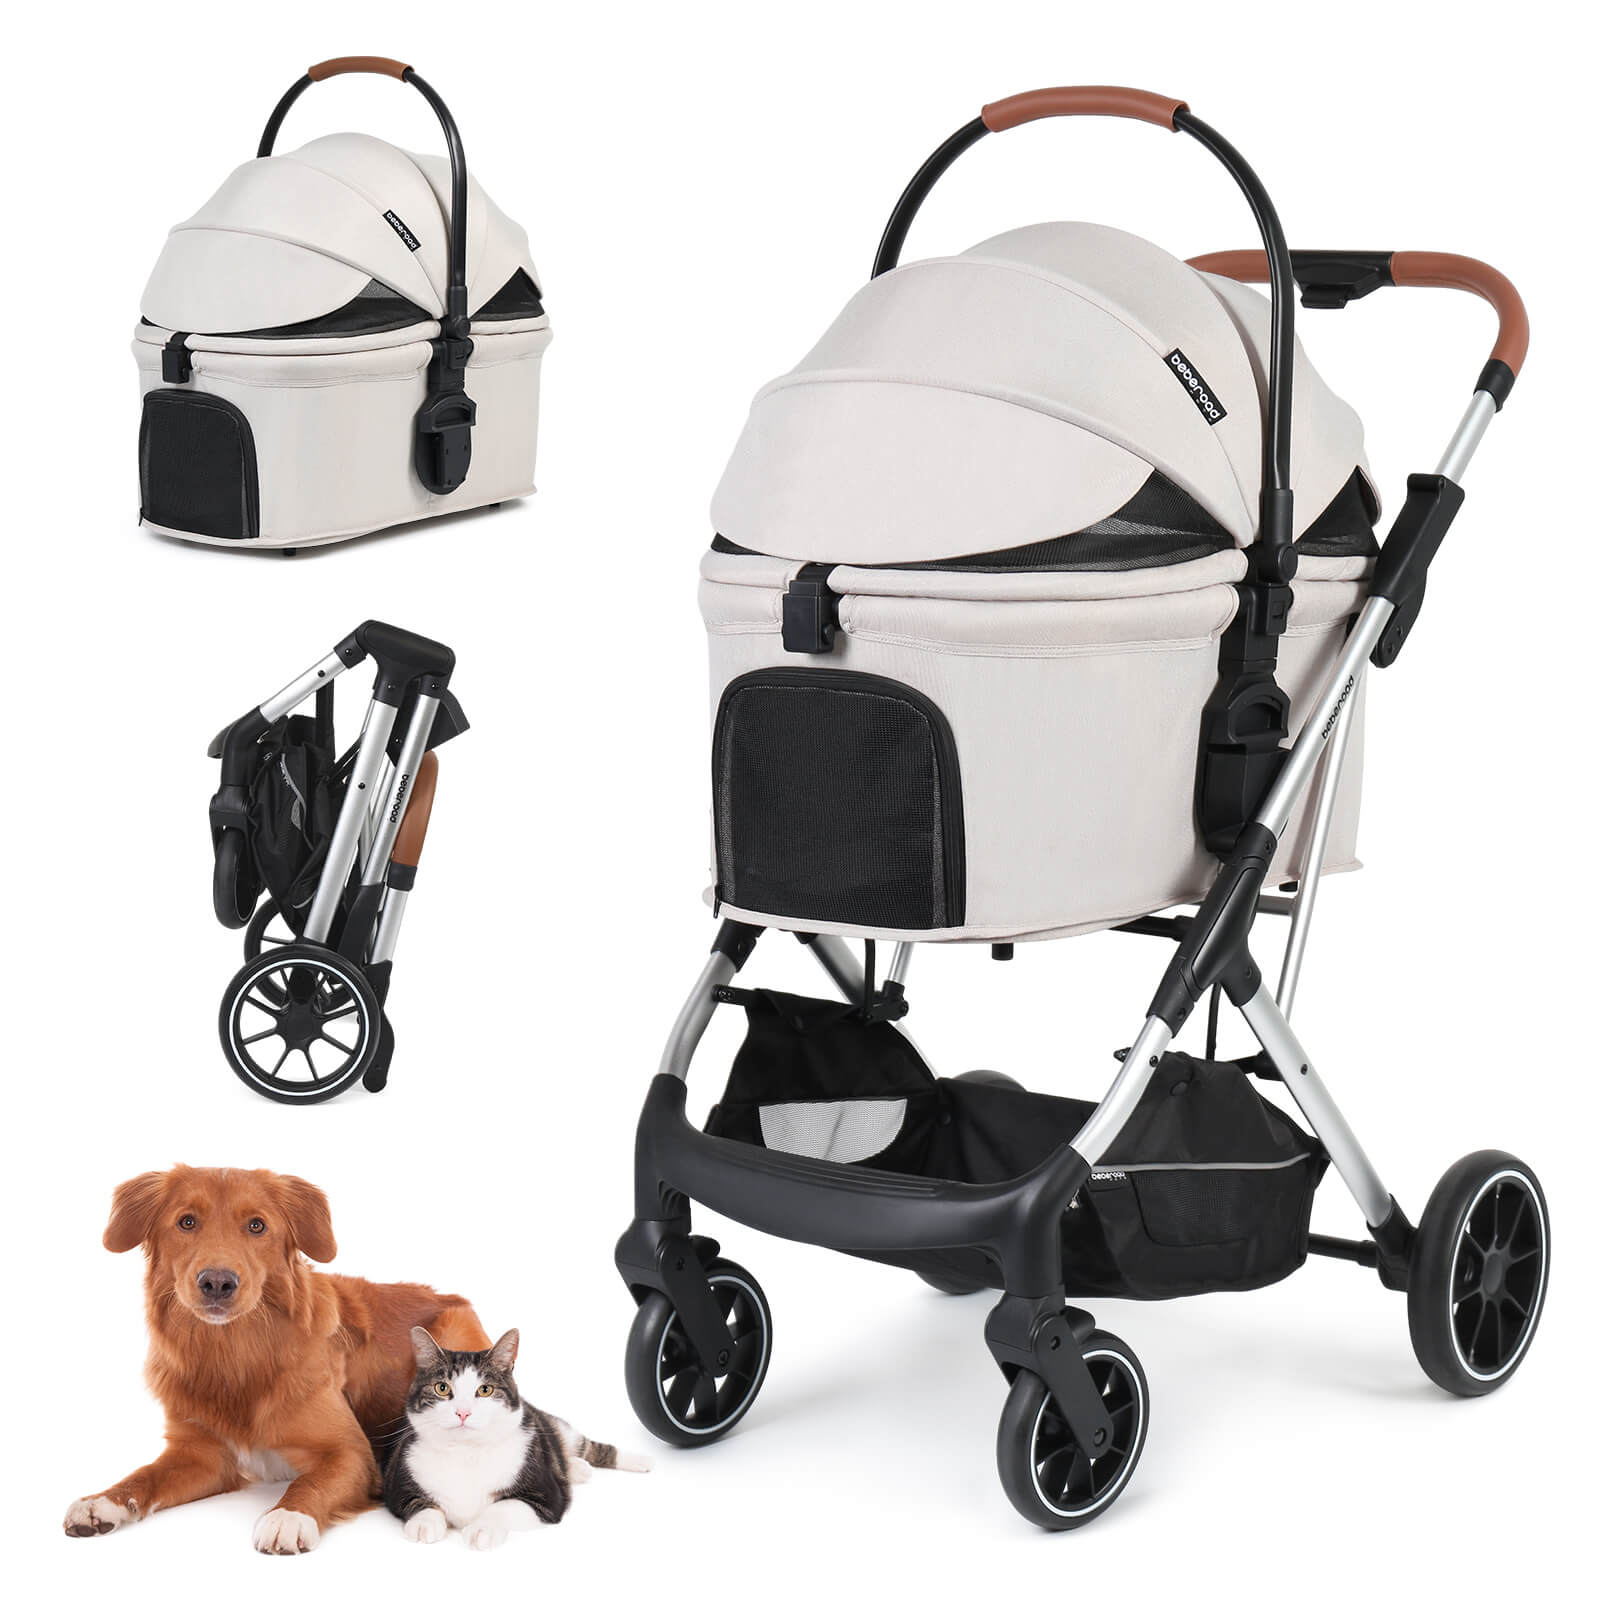 T6 Luxury Pet Stroller for Medium Dog Under 66lbs